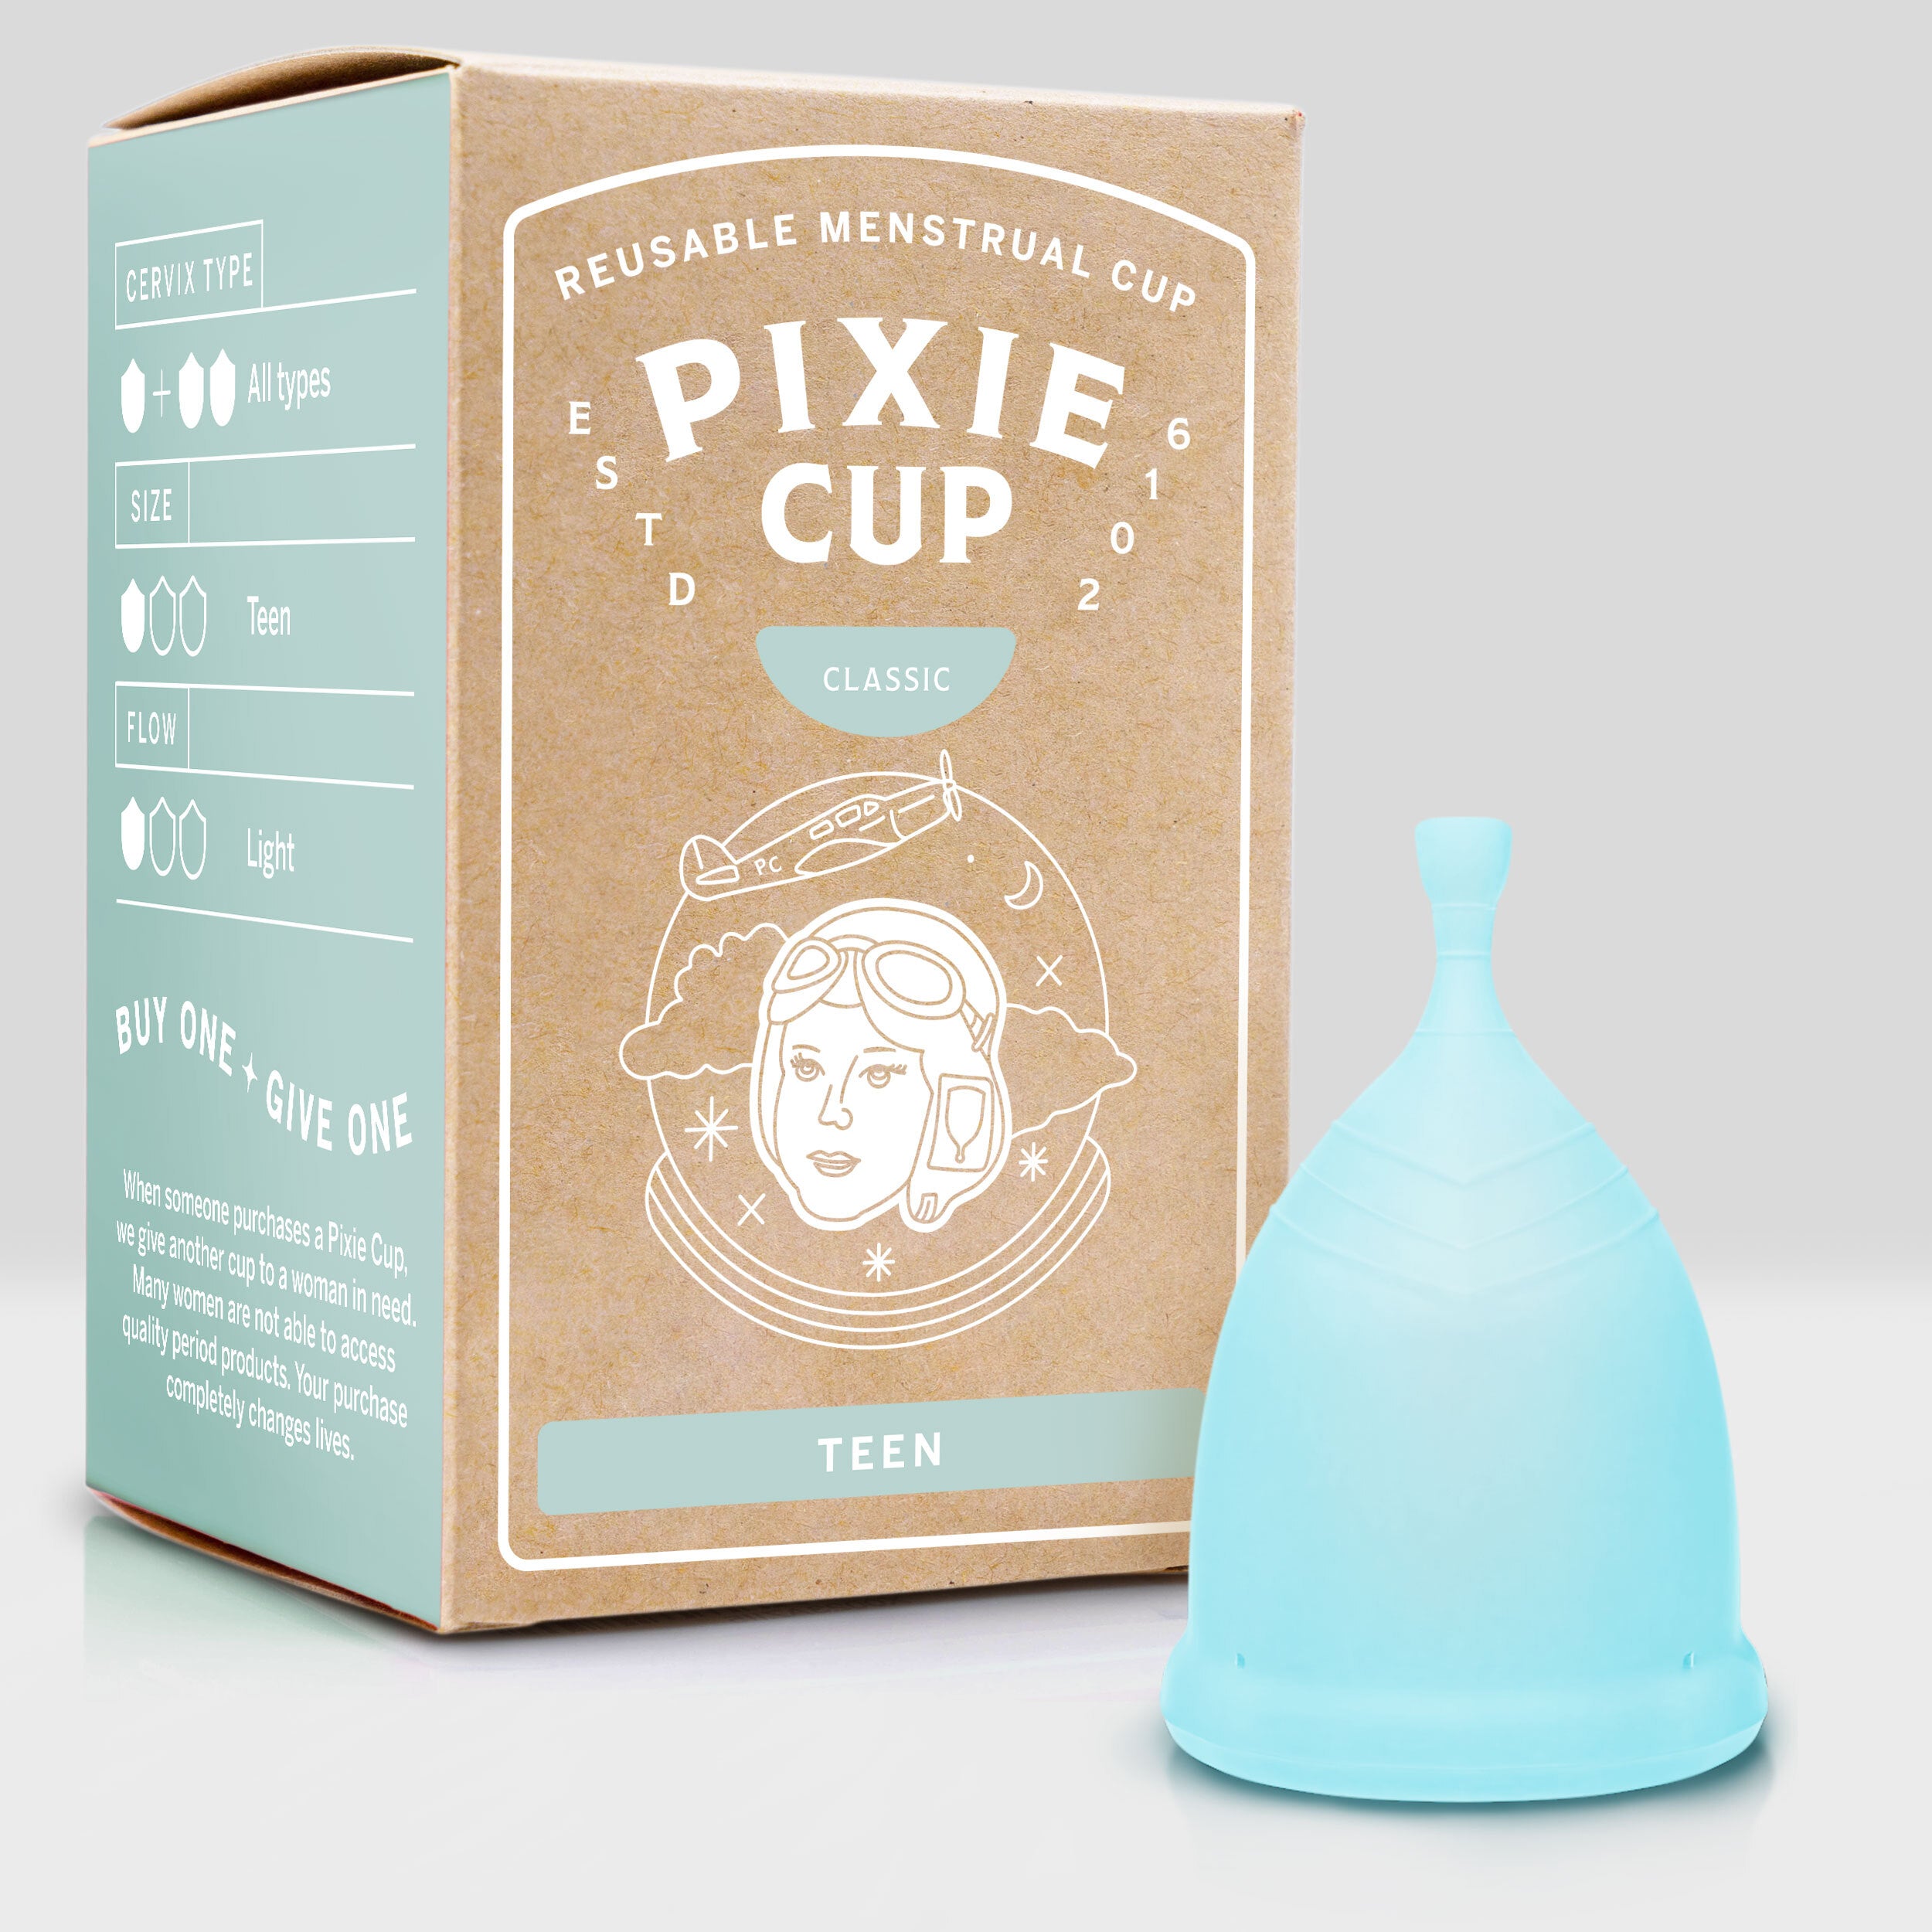 Pixie Cup Reusable Menstrual Cup